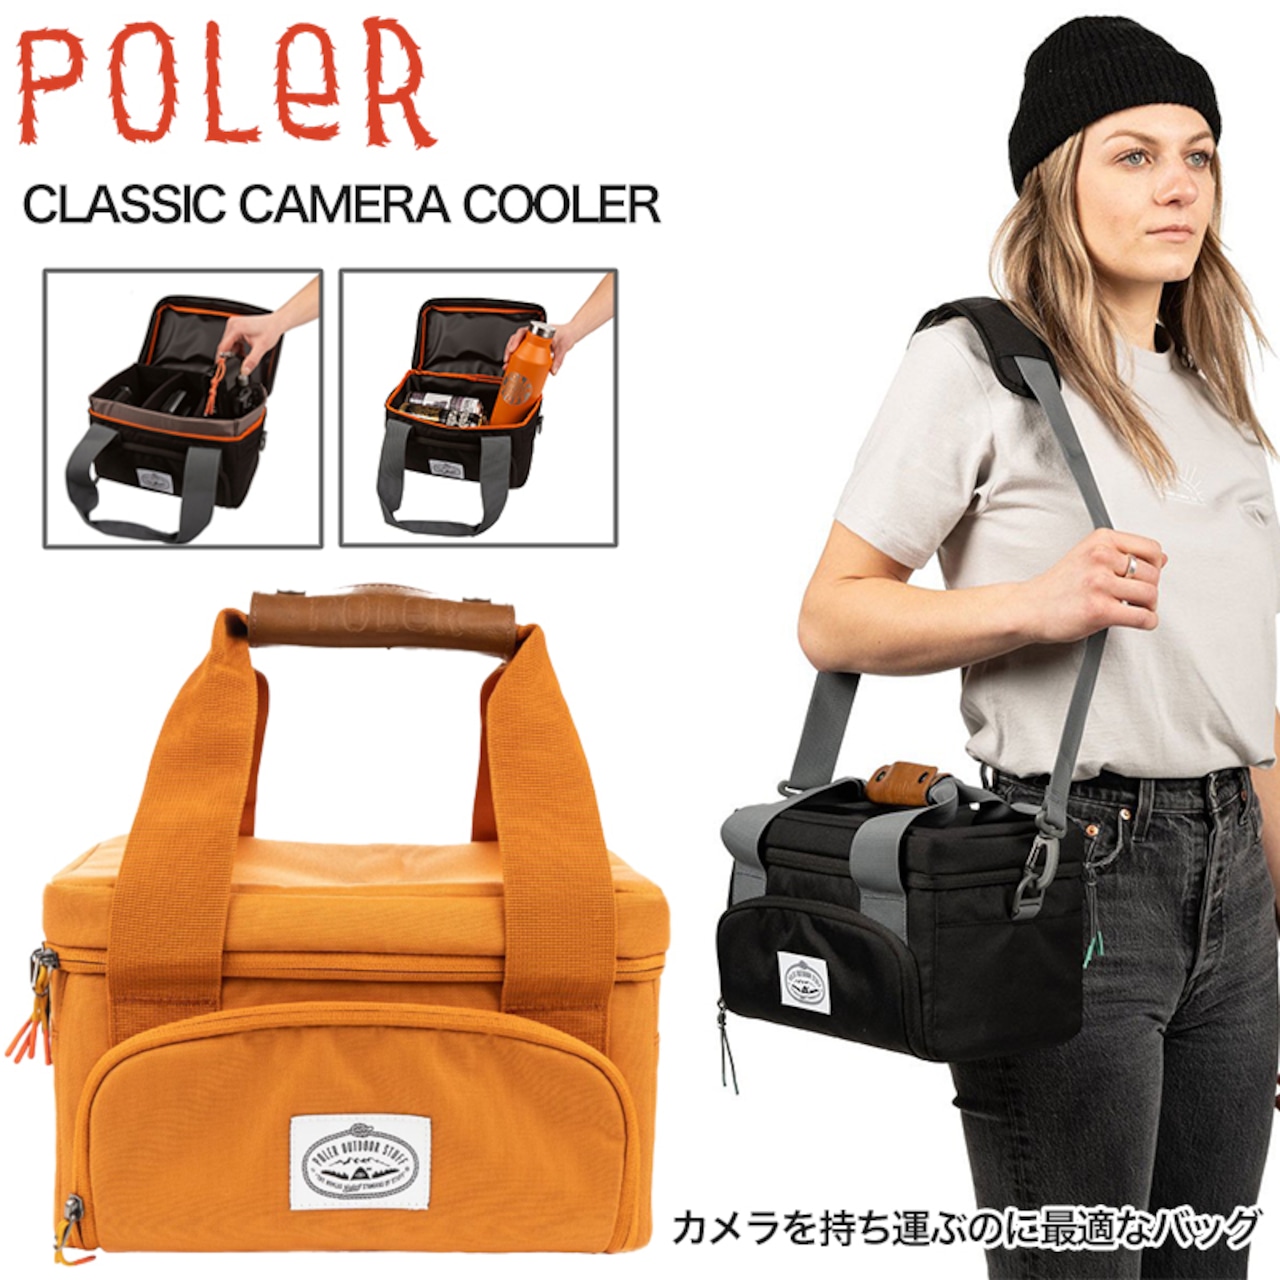 POLeR ポーラー CLASSIC CAMERA COOLER カメラバック クーラーバック バッグ